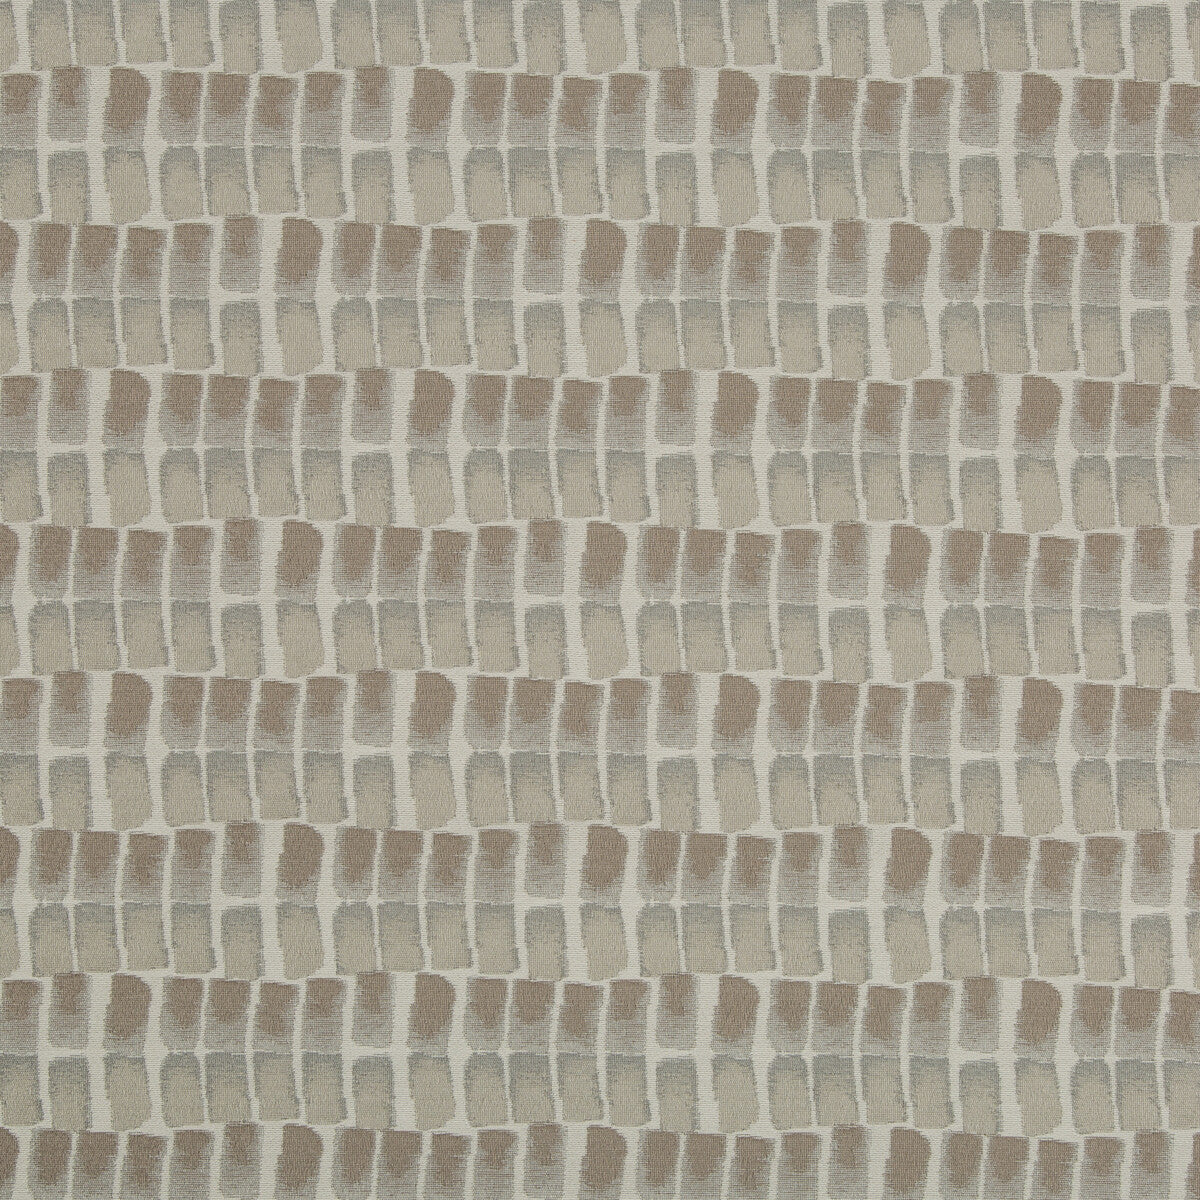 Shortstack fabric in birch color - pattern 34591.1611.0 - by Kravet Design